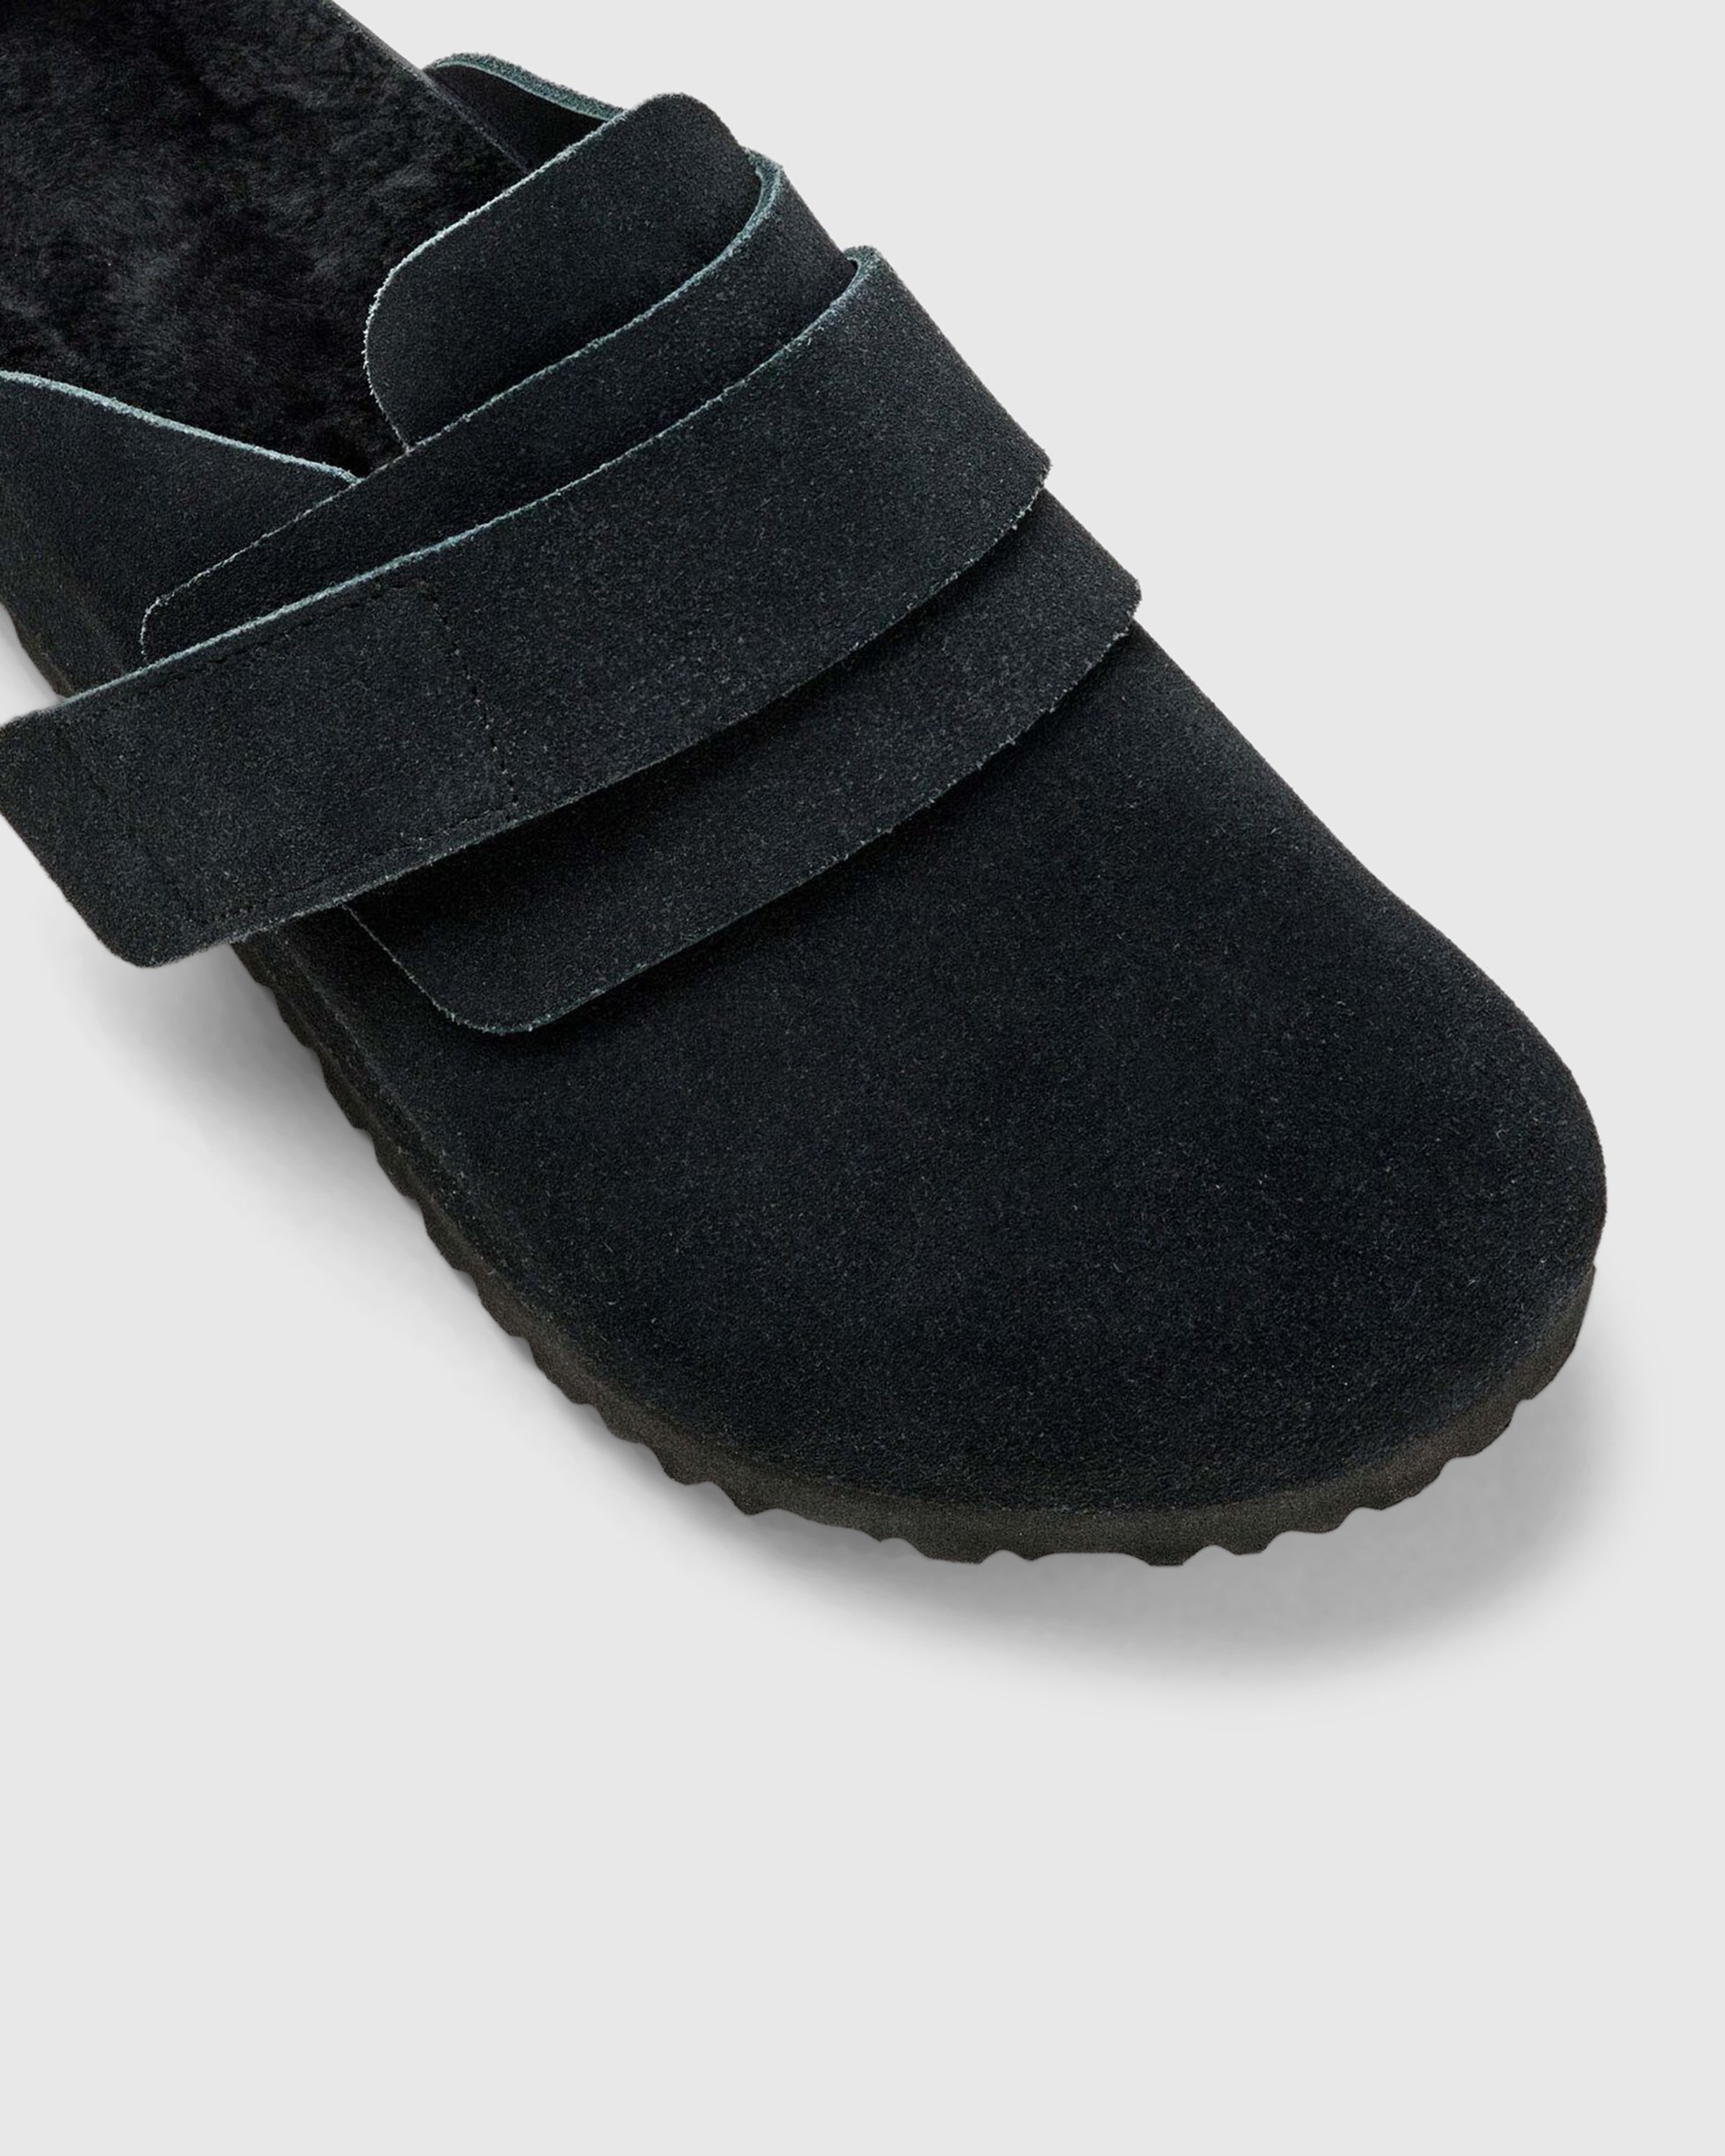 Birkenstock x Tekla - Shearling Nagoya Slate/Black - Footwear - Black - Image 3